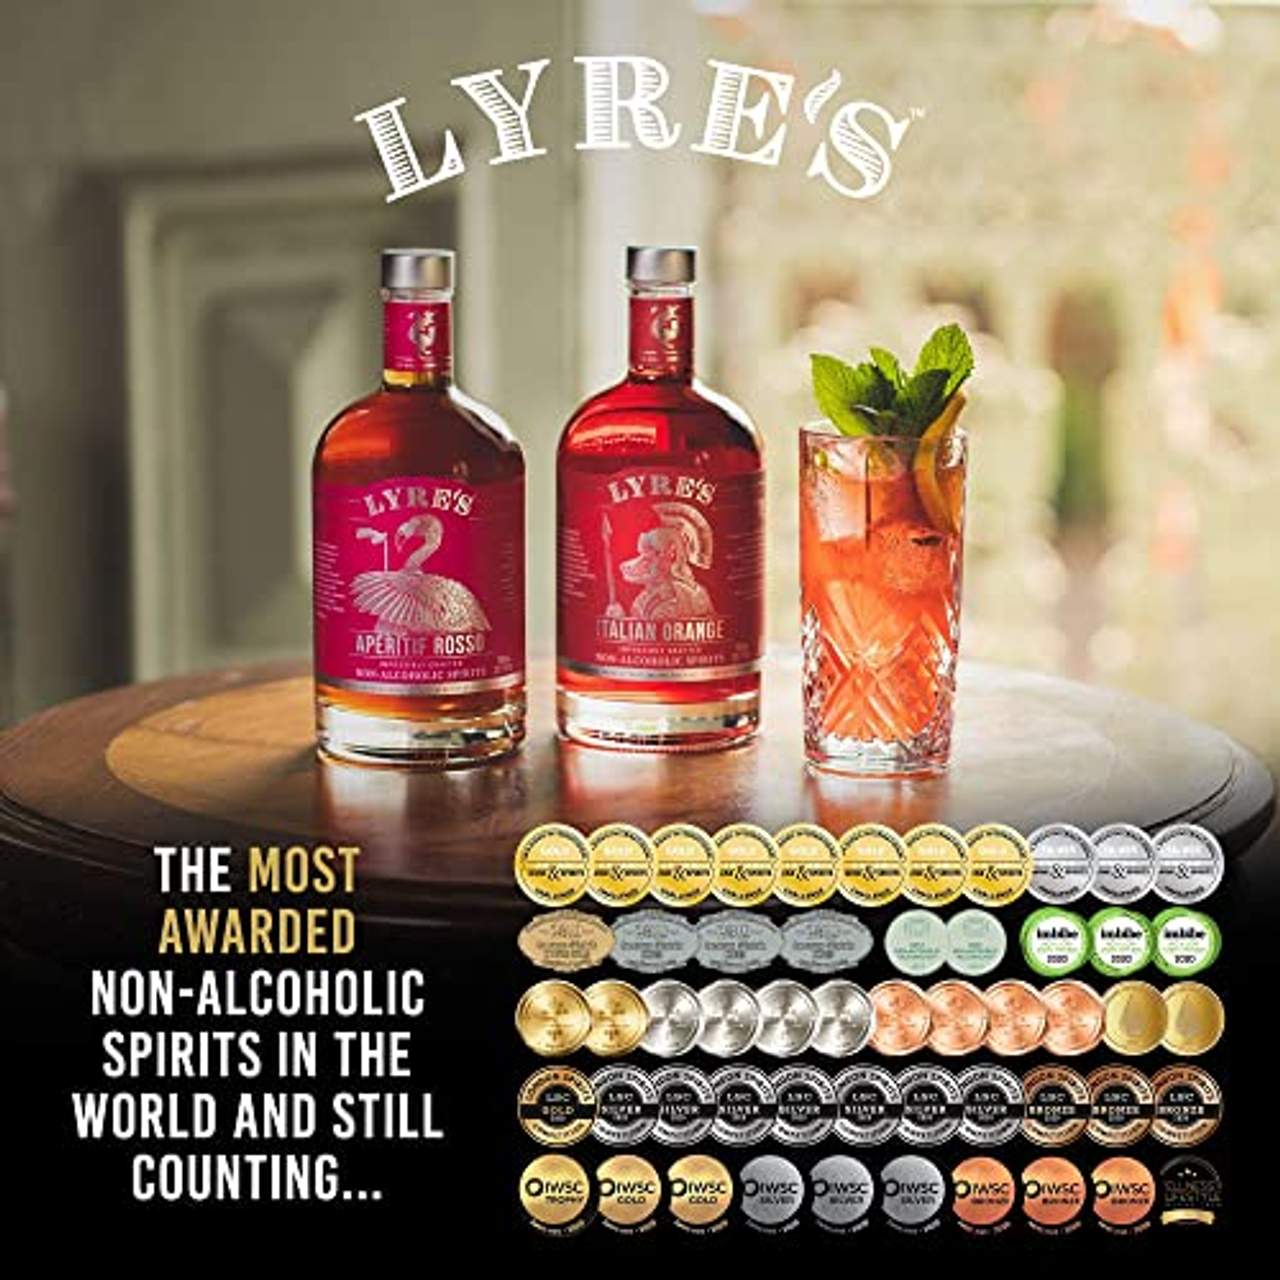 Lyre's Dry London Non-Alcoholic Spirit